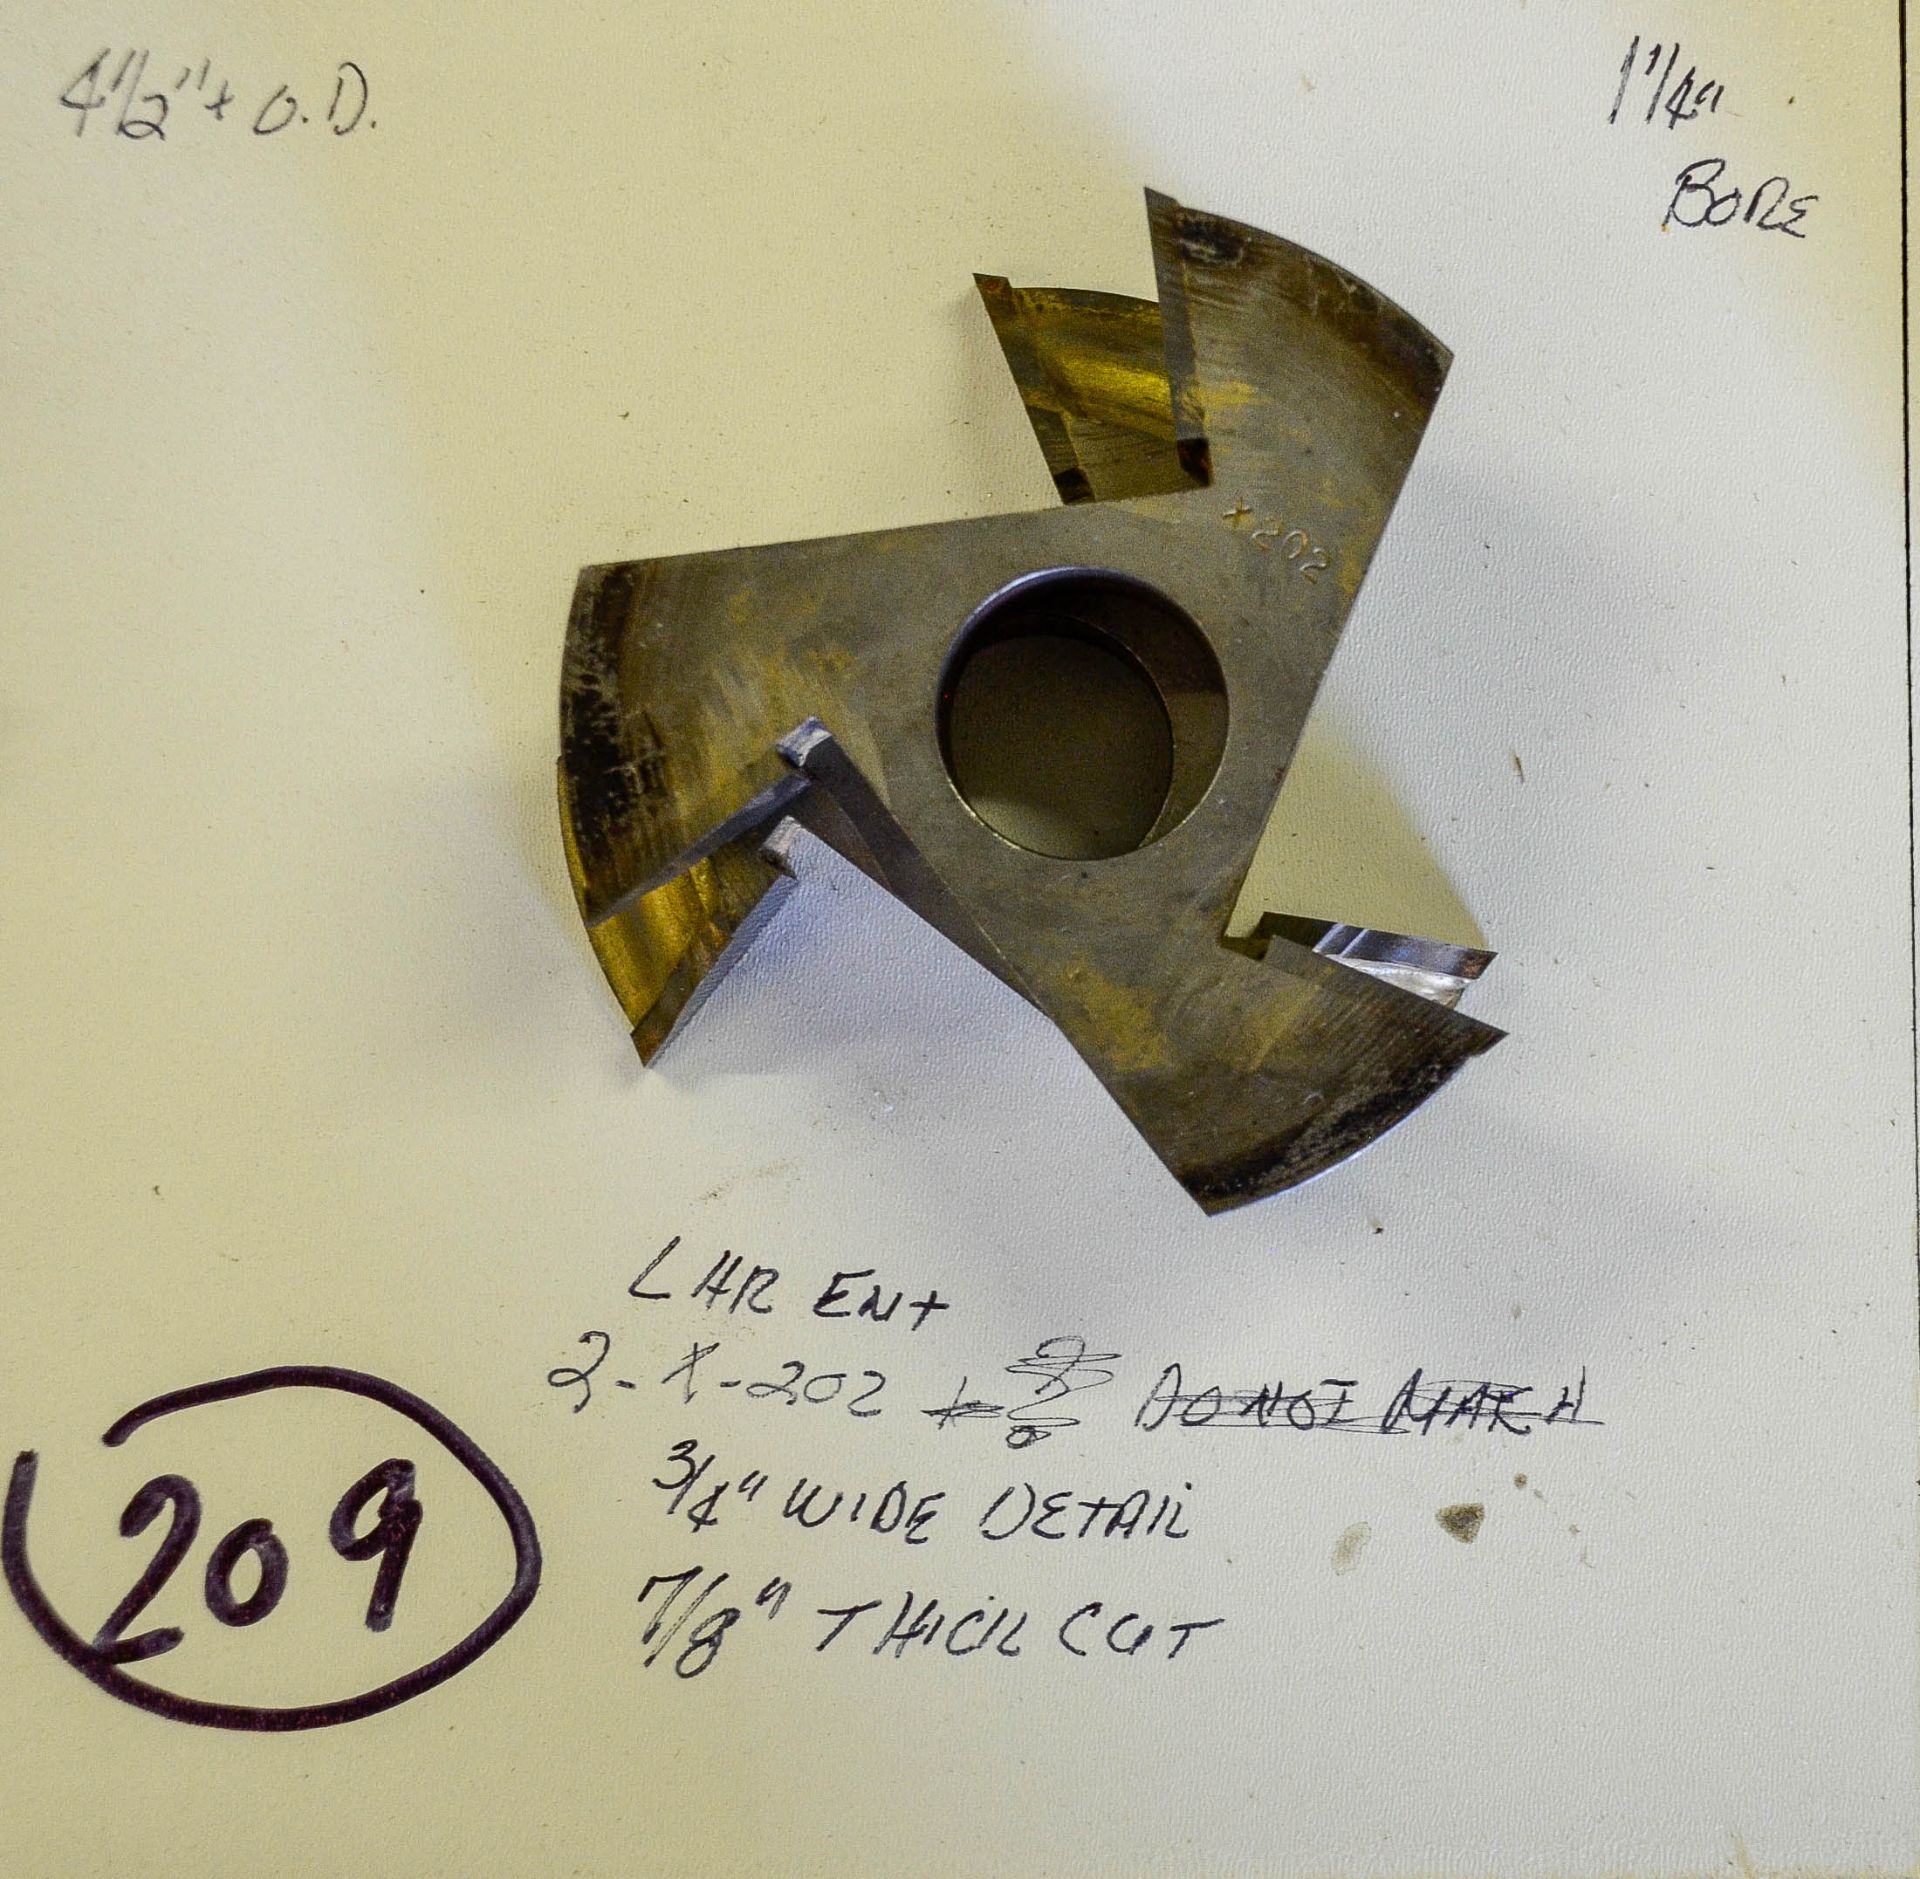 Shaper Cutter, L.R.H. ENT. X 202, 7/8" Thick Cut, 3/4" Wide Detail, 4-1/2" Outside Diameter,